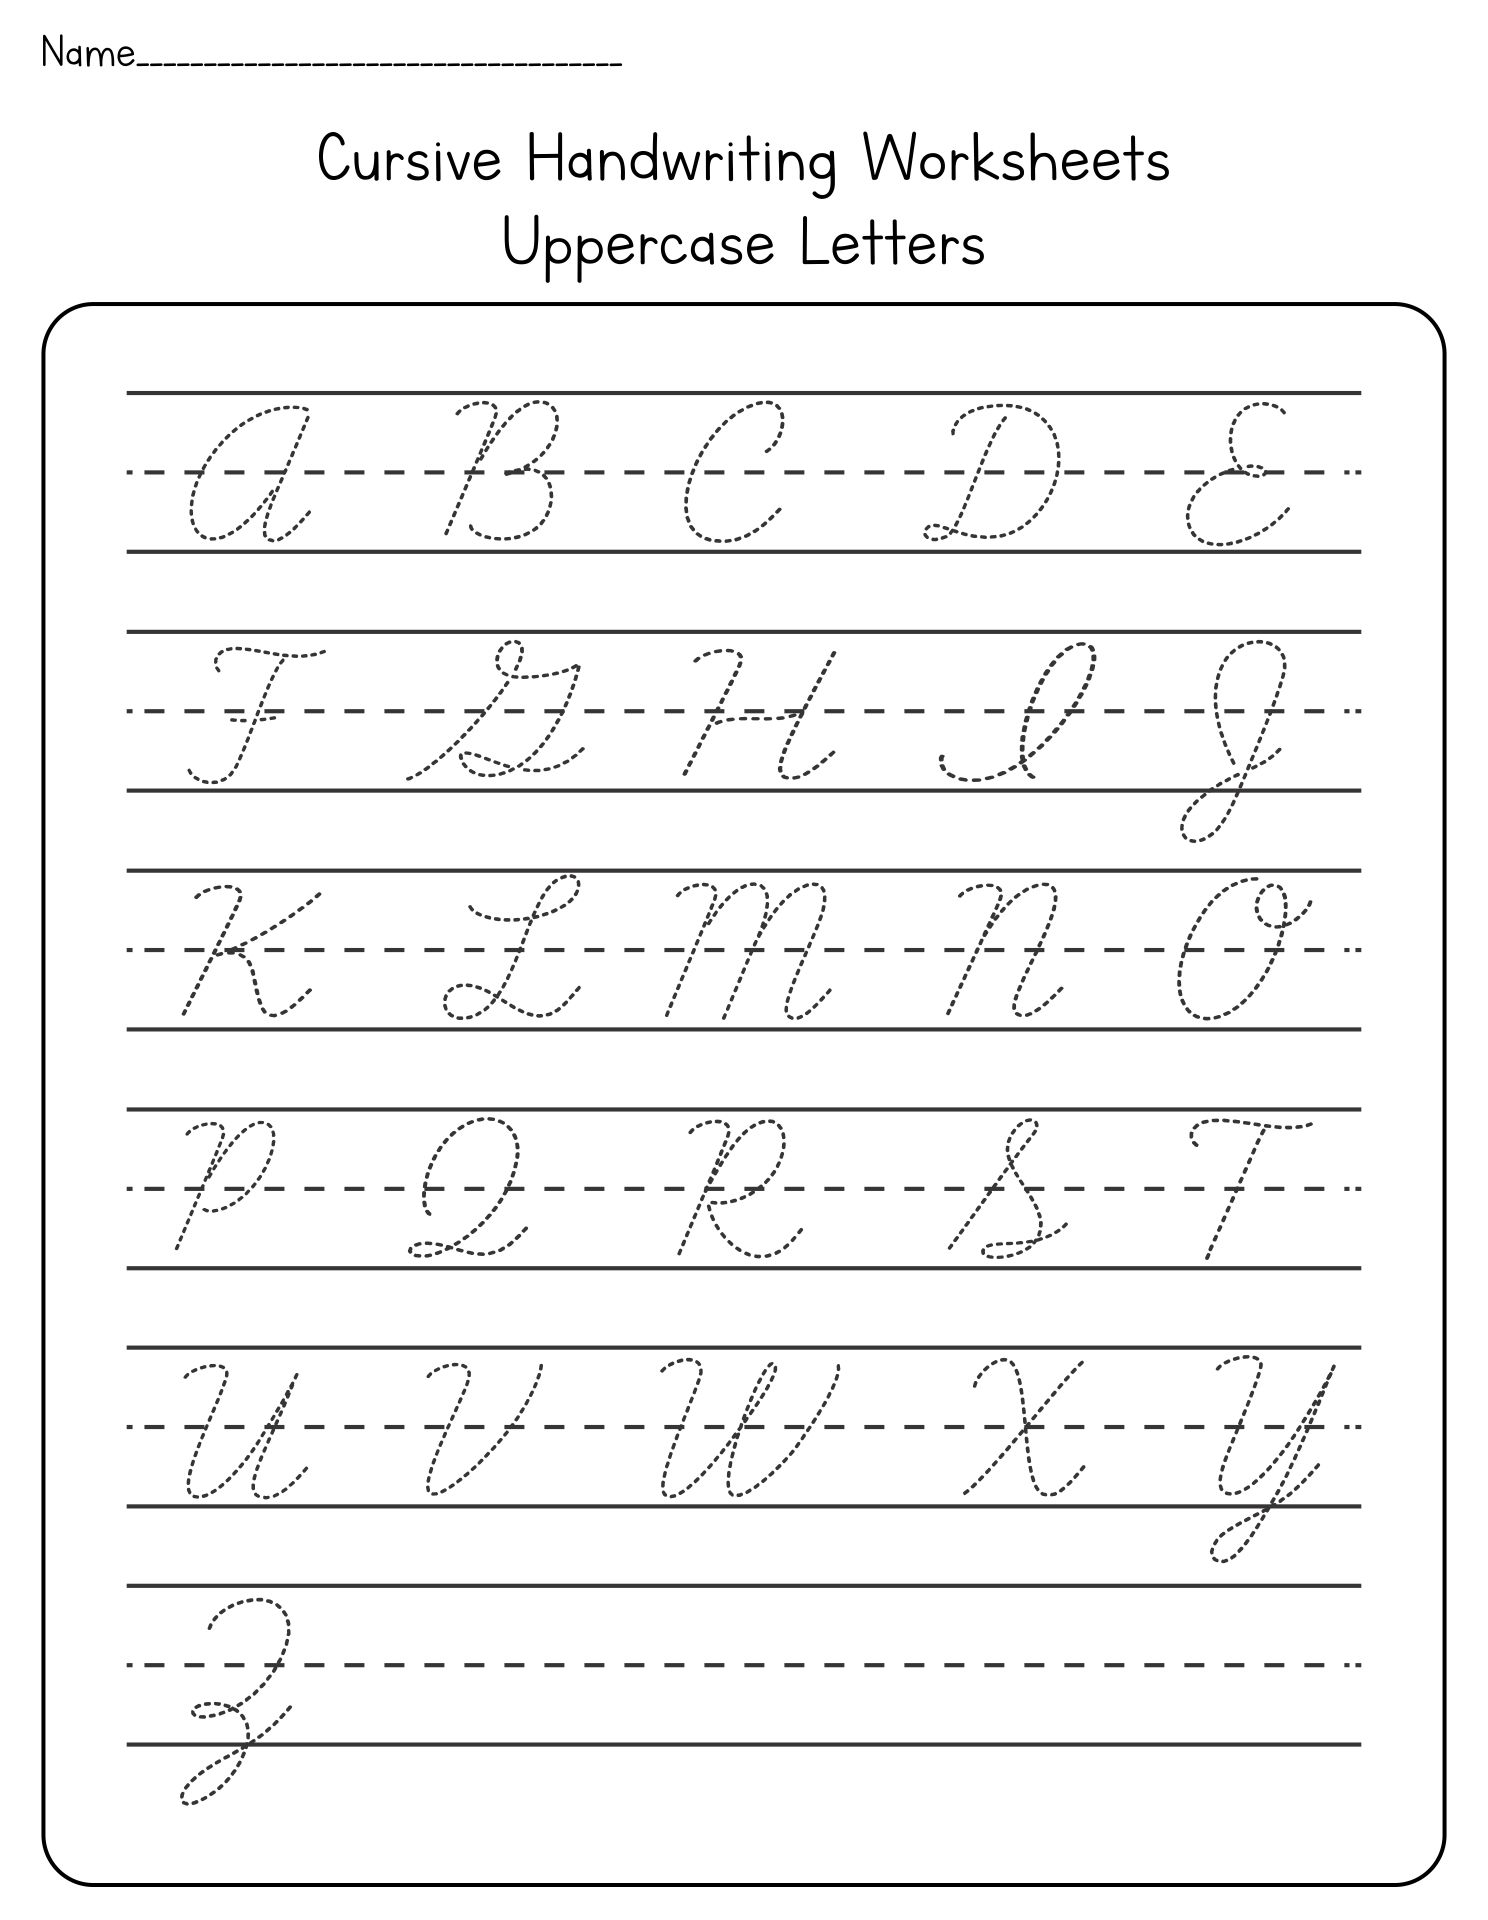 Cursive Handwriting Worksheets for Kids